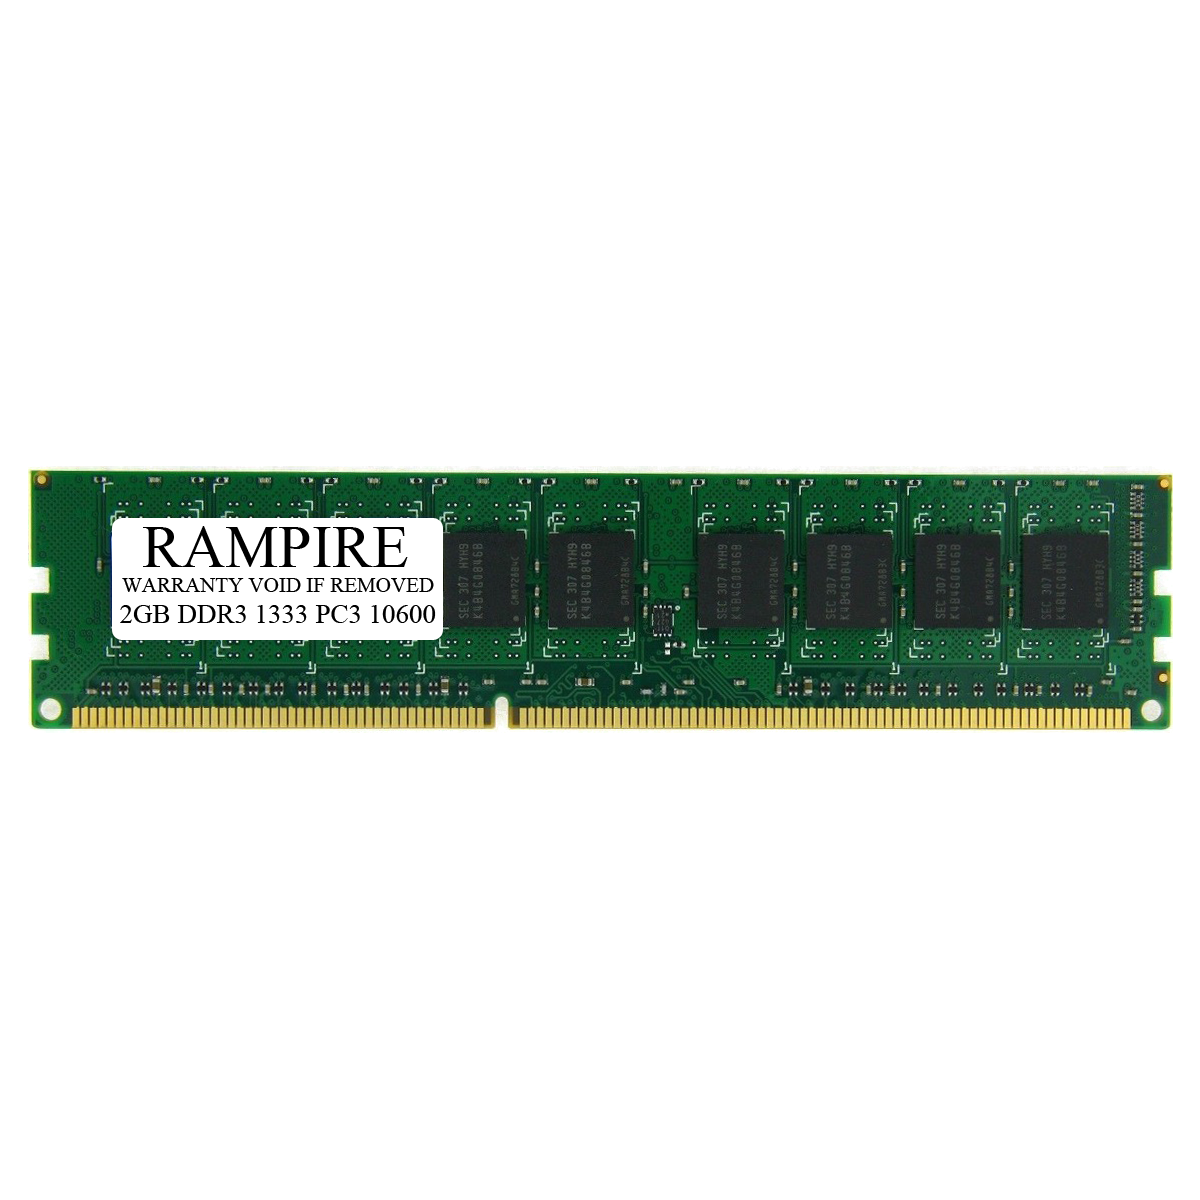 RAMPIRE 2GB DDR3 1333 (PC3 10600) 240-Pin SDRAM 2Rx8 Standard Profile 1.5V ECC Unregistered Server Memory